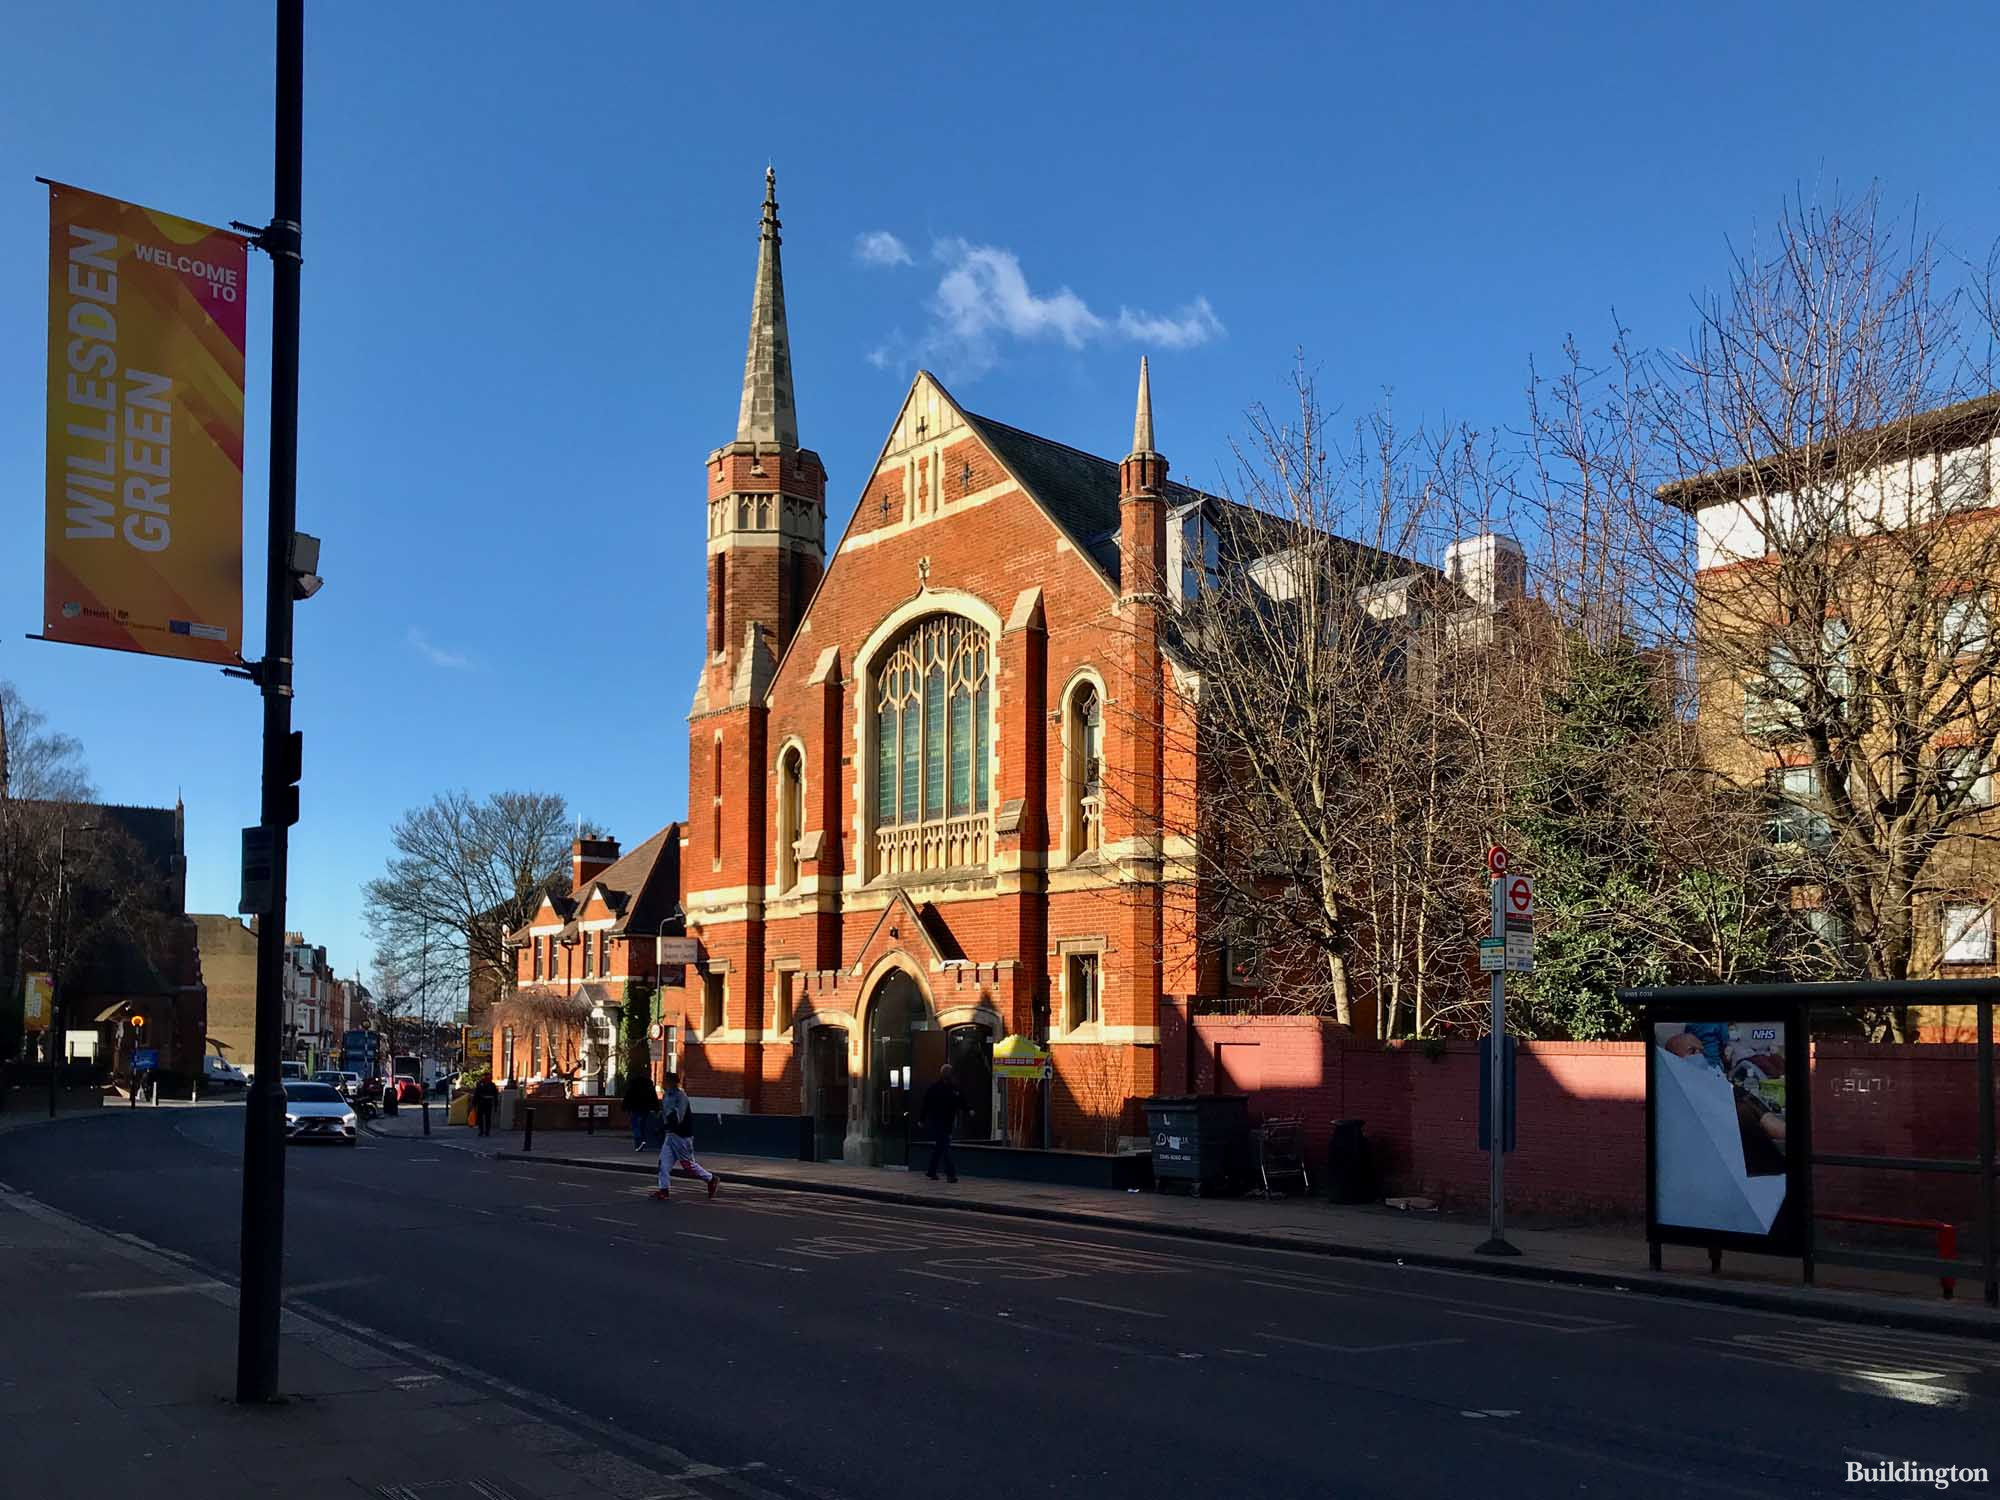 Willesden Green Baptist Church on Willesden Green High Road in London NW10.